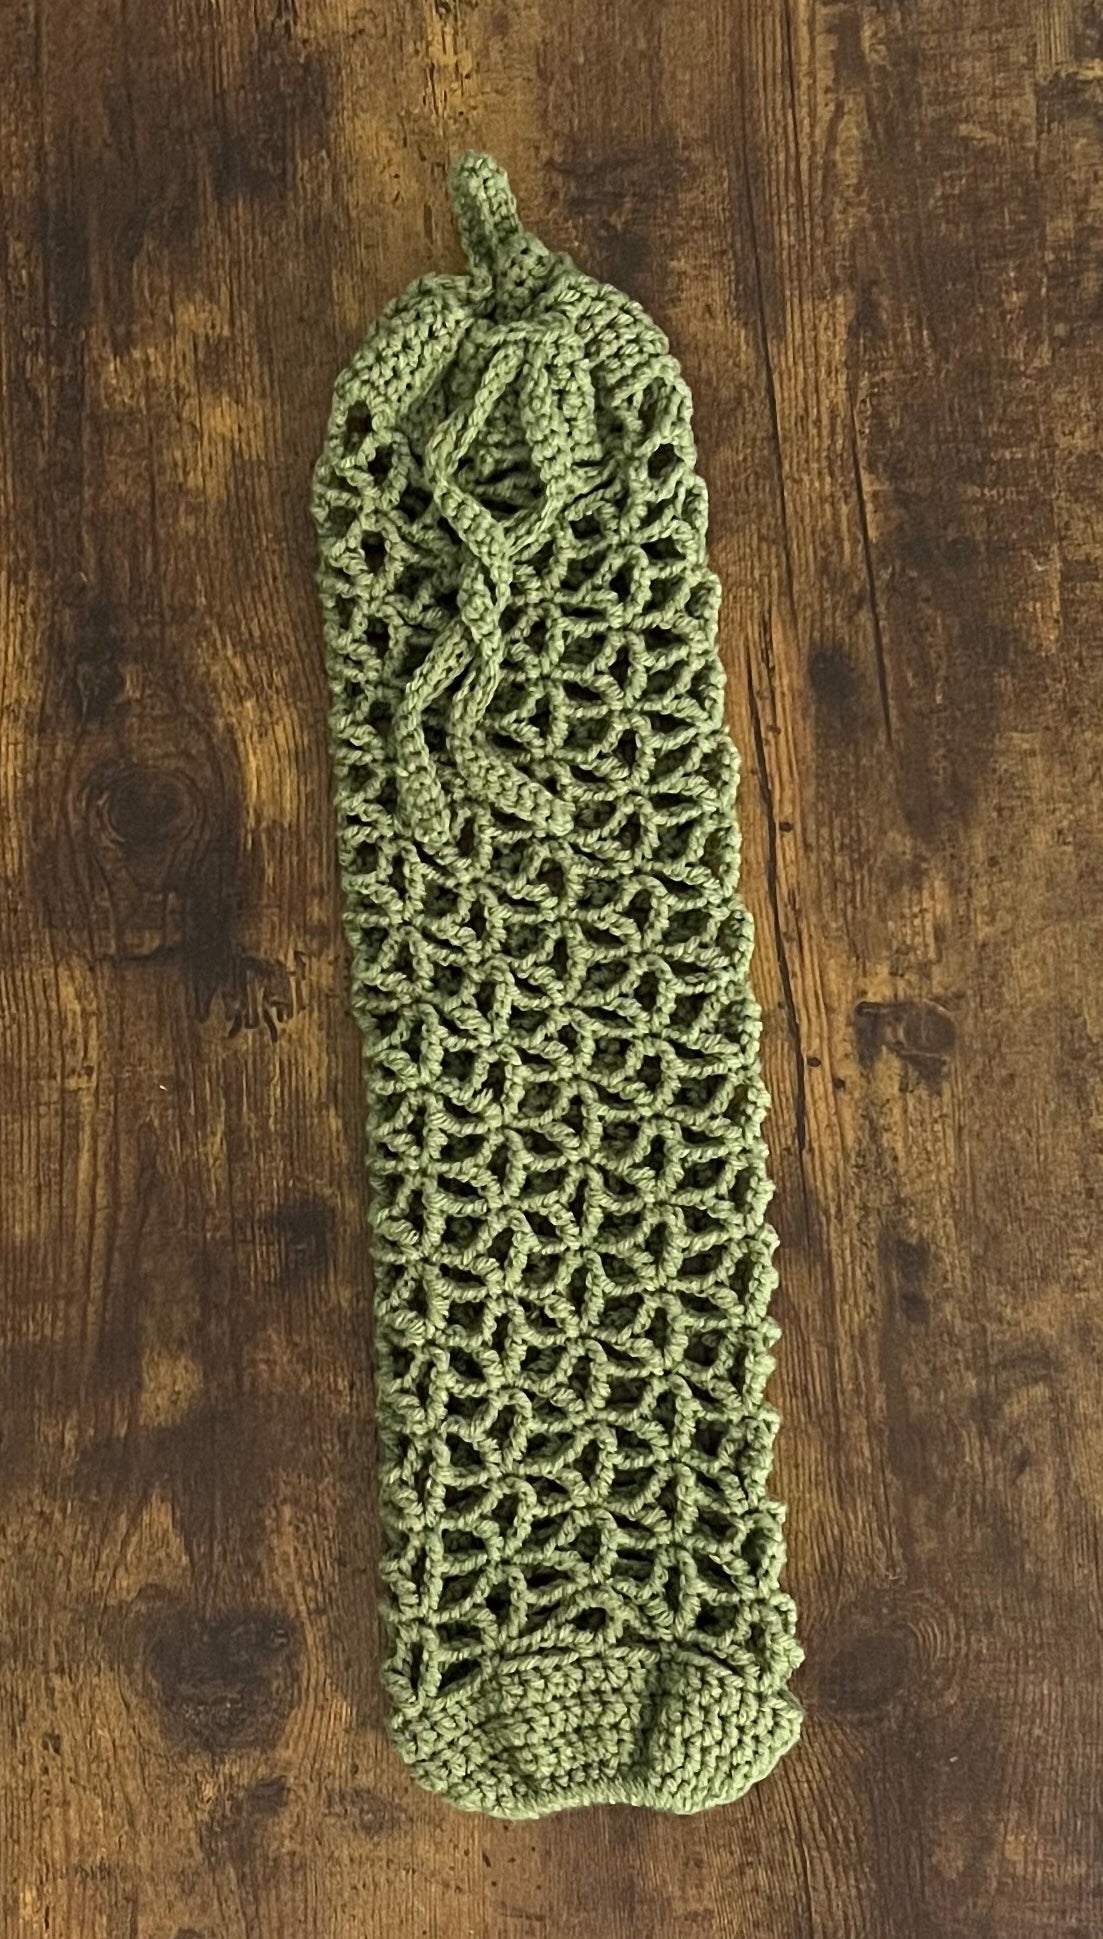 Crochet Plastic Bag Saver